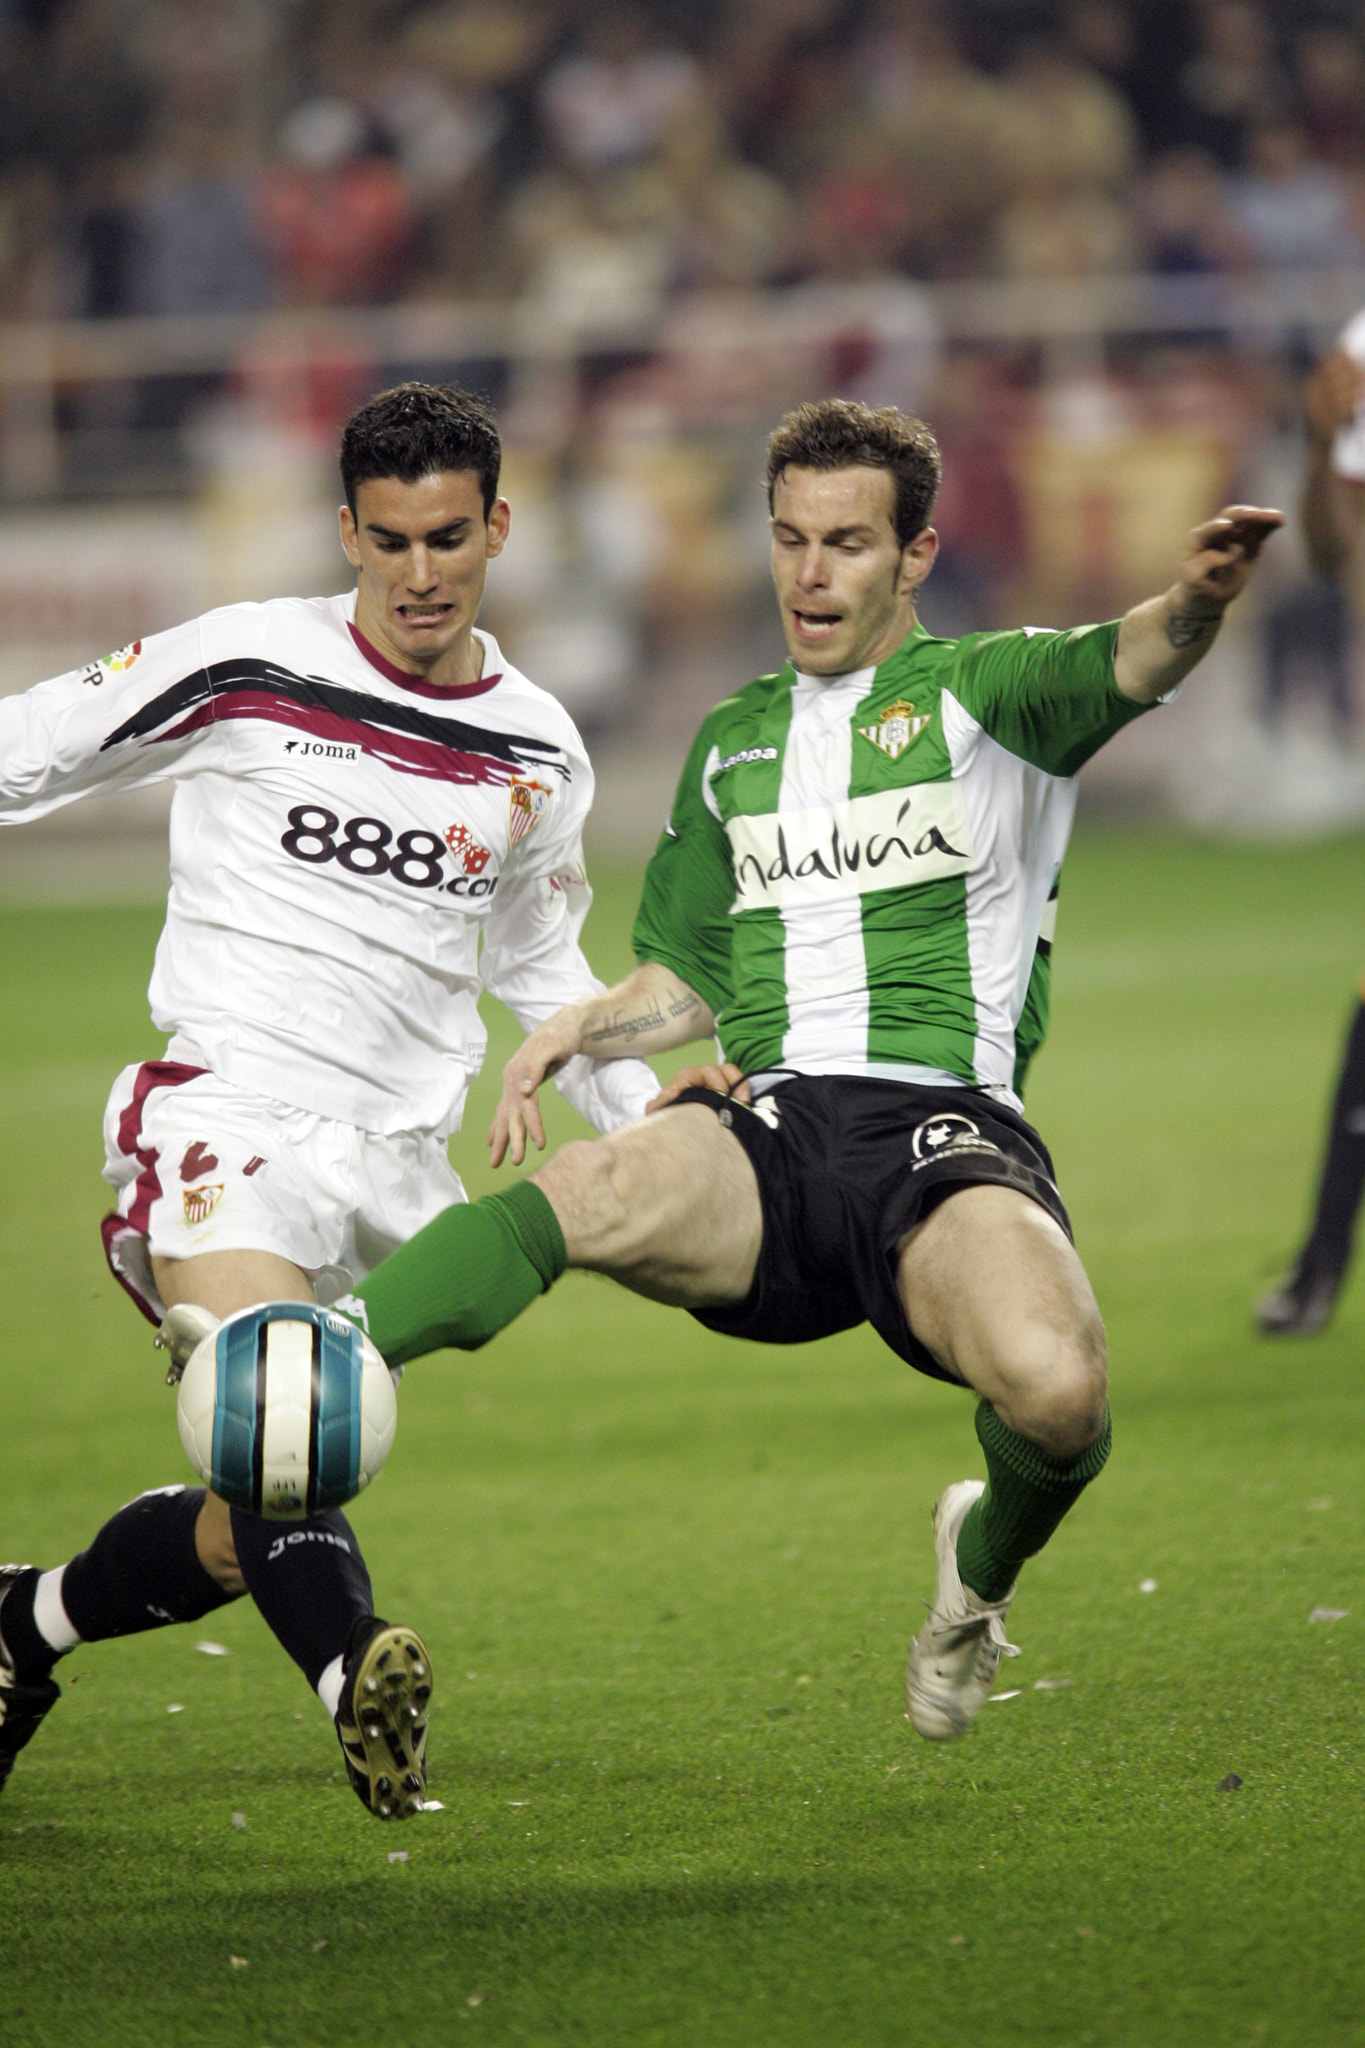 Fernando Vega (Betis) and Alejandro Alfaro (Sevilla) fighting for the ball. Taken at Sanchez Pizjuan